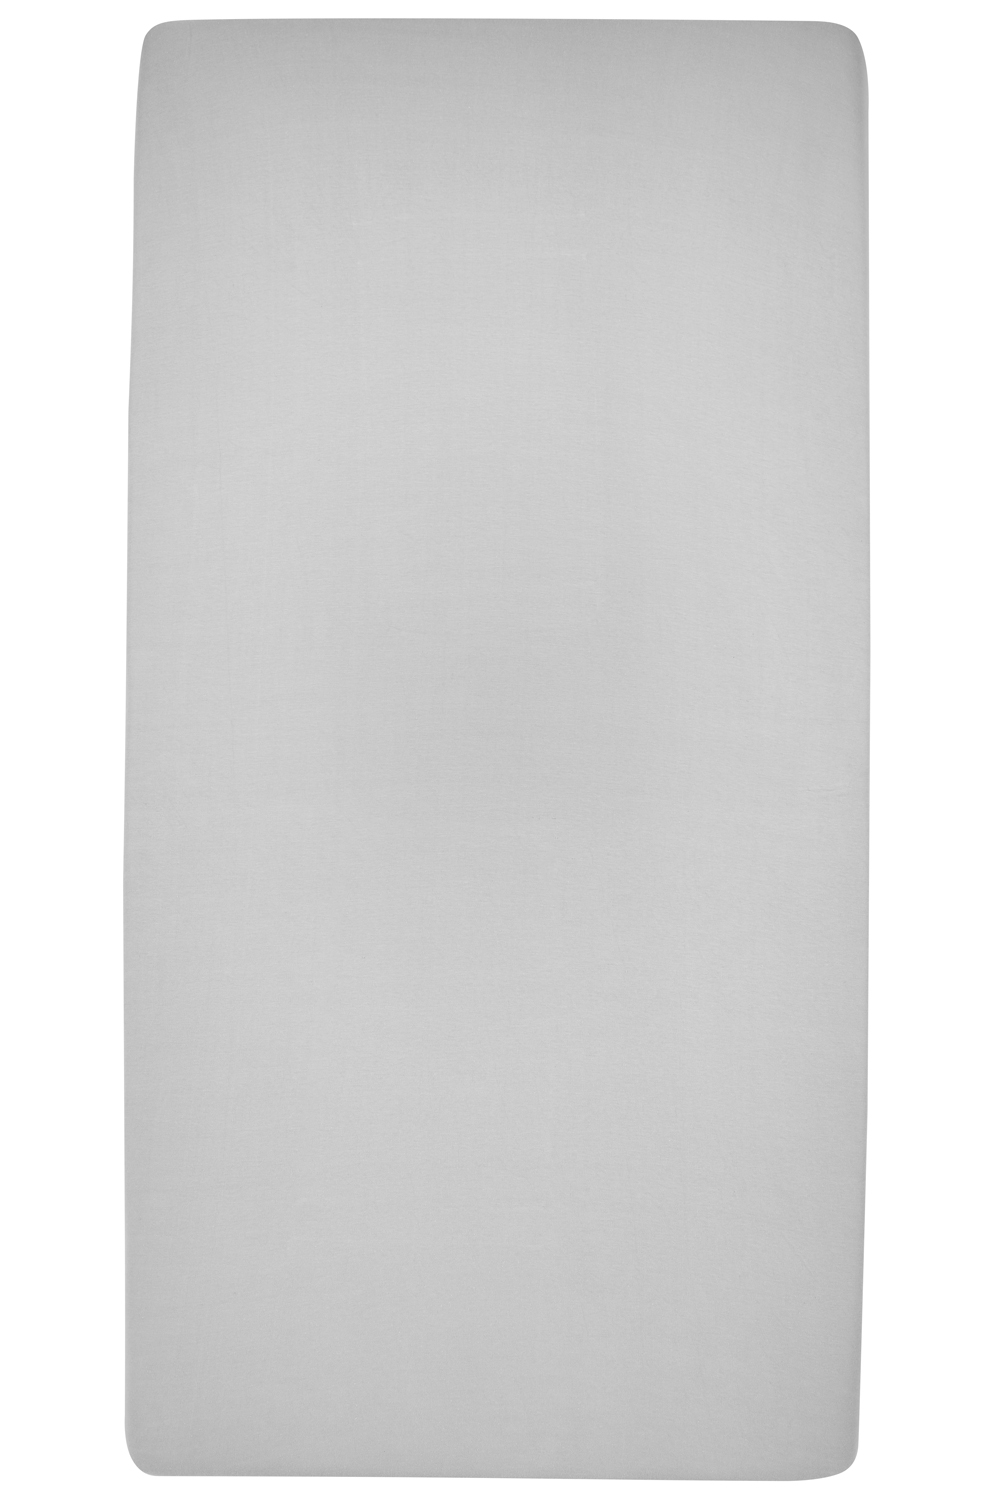 Hoeslaken boxmatras Uni - light grey - 75x95cm